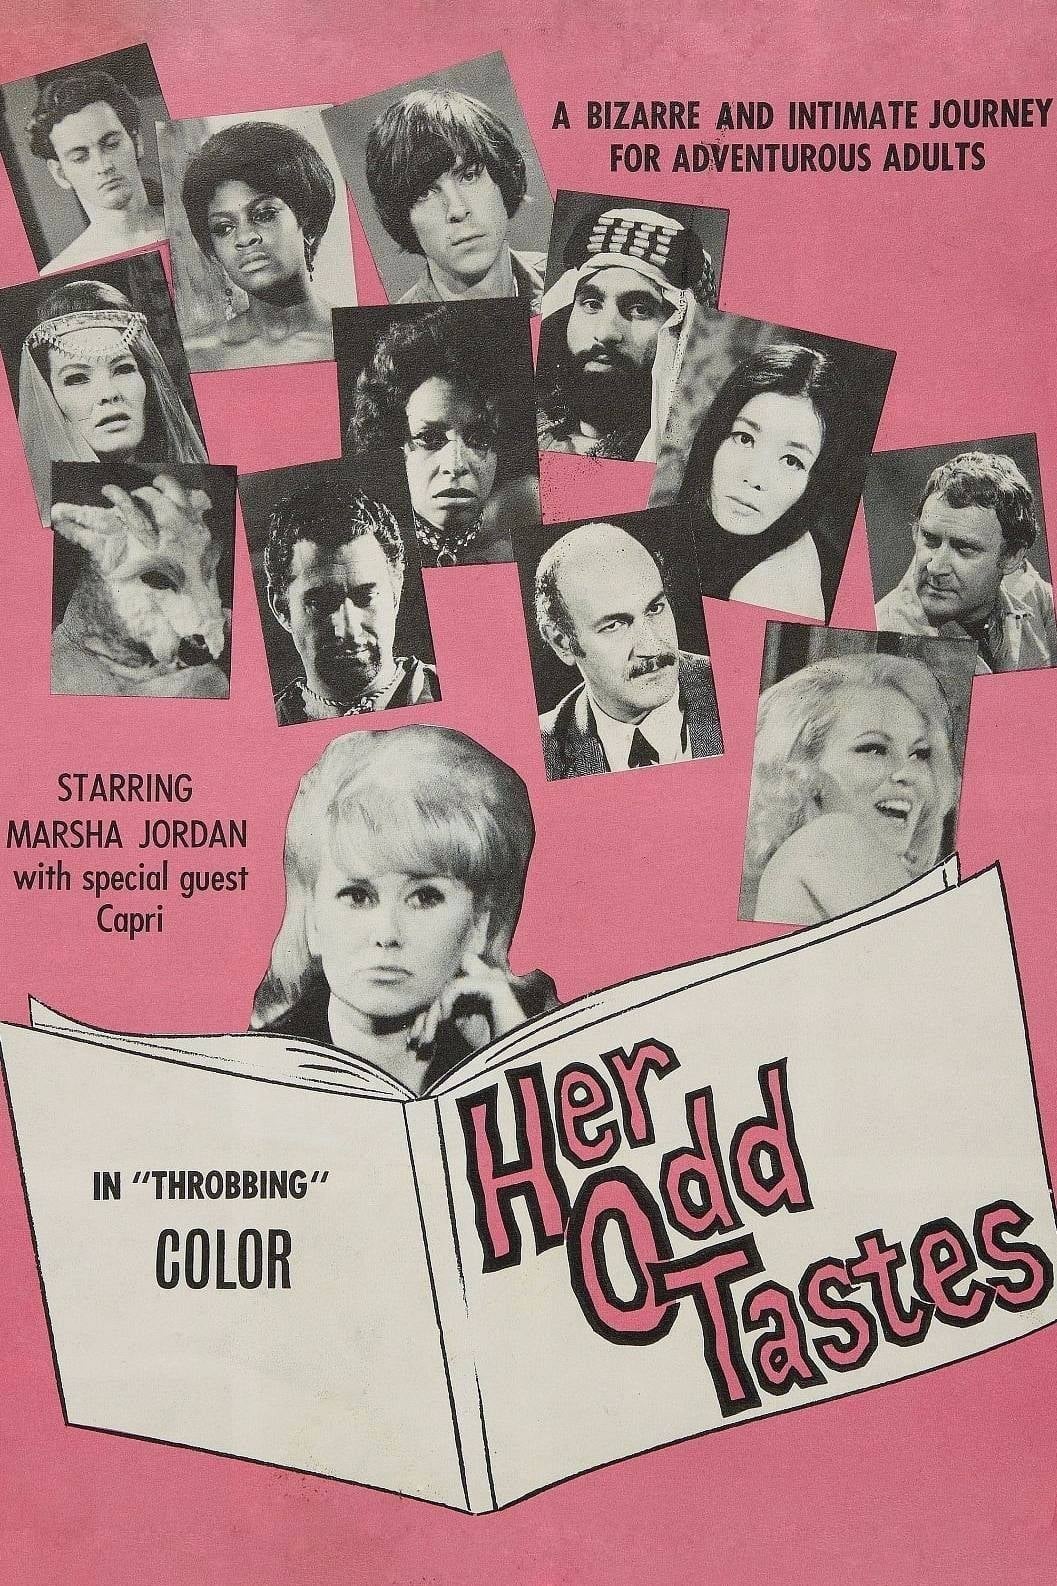 Her Odd Tastes (1969)